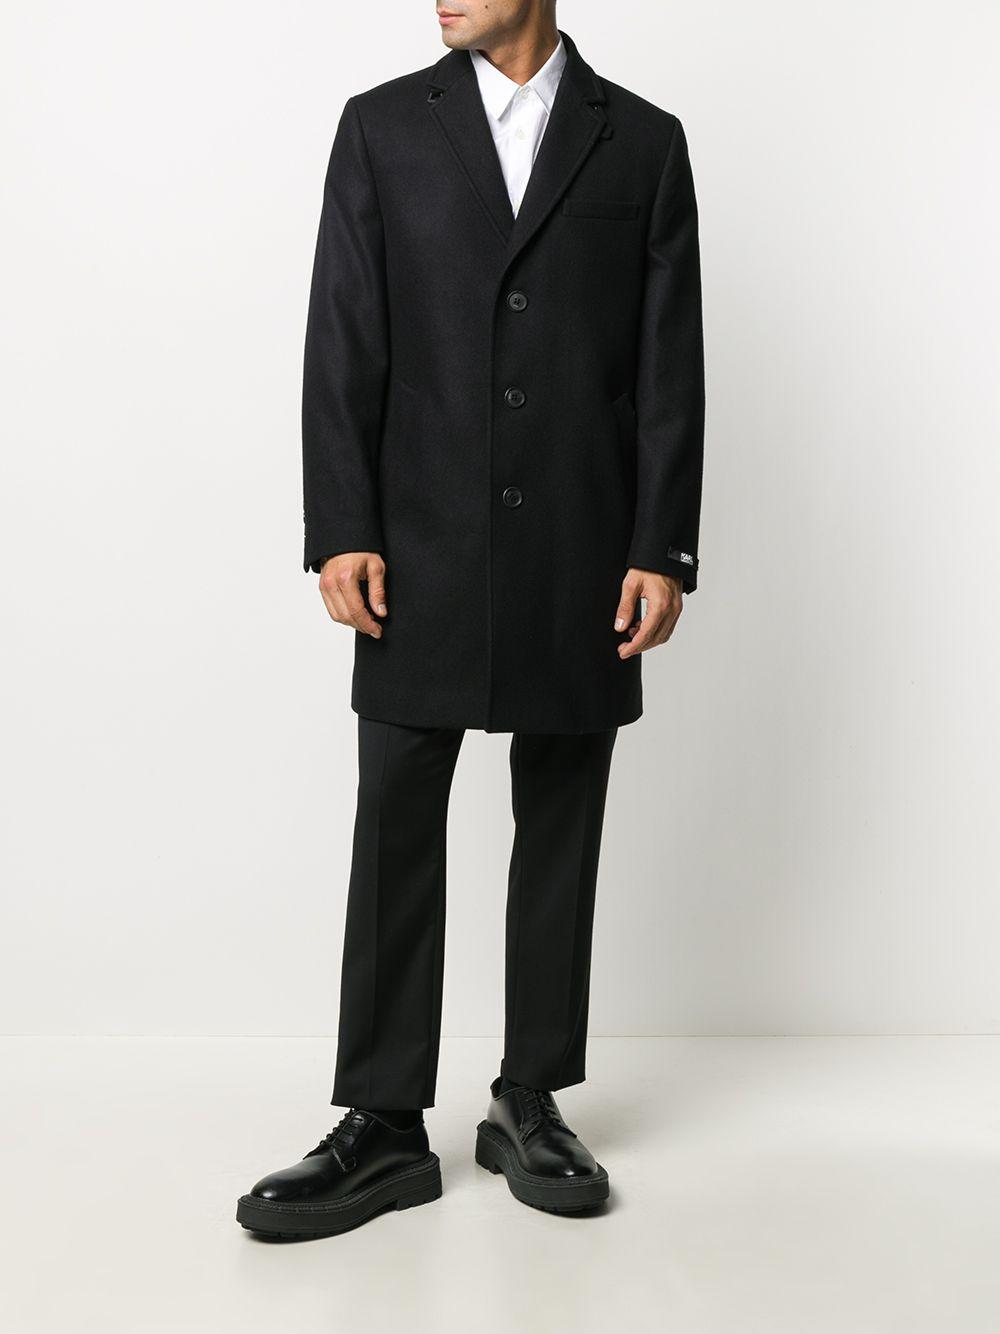 Karl Lagerfeld Wool Single-breasted Coat in Black for Men - Lyst